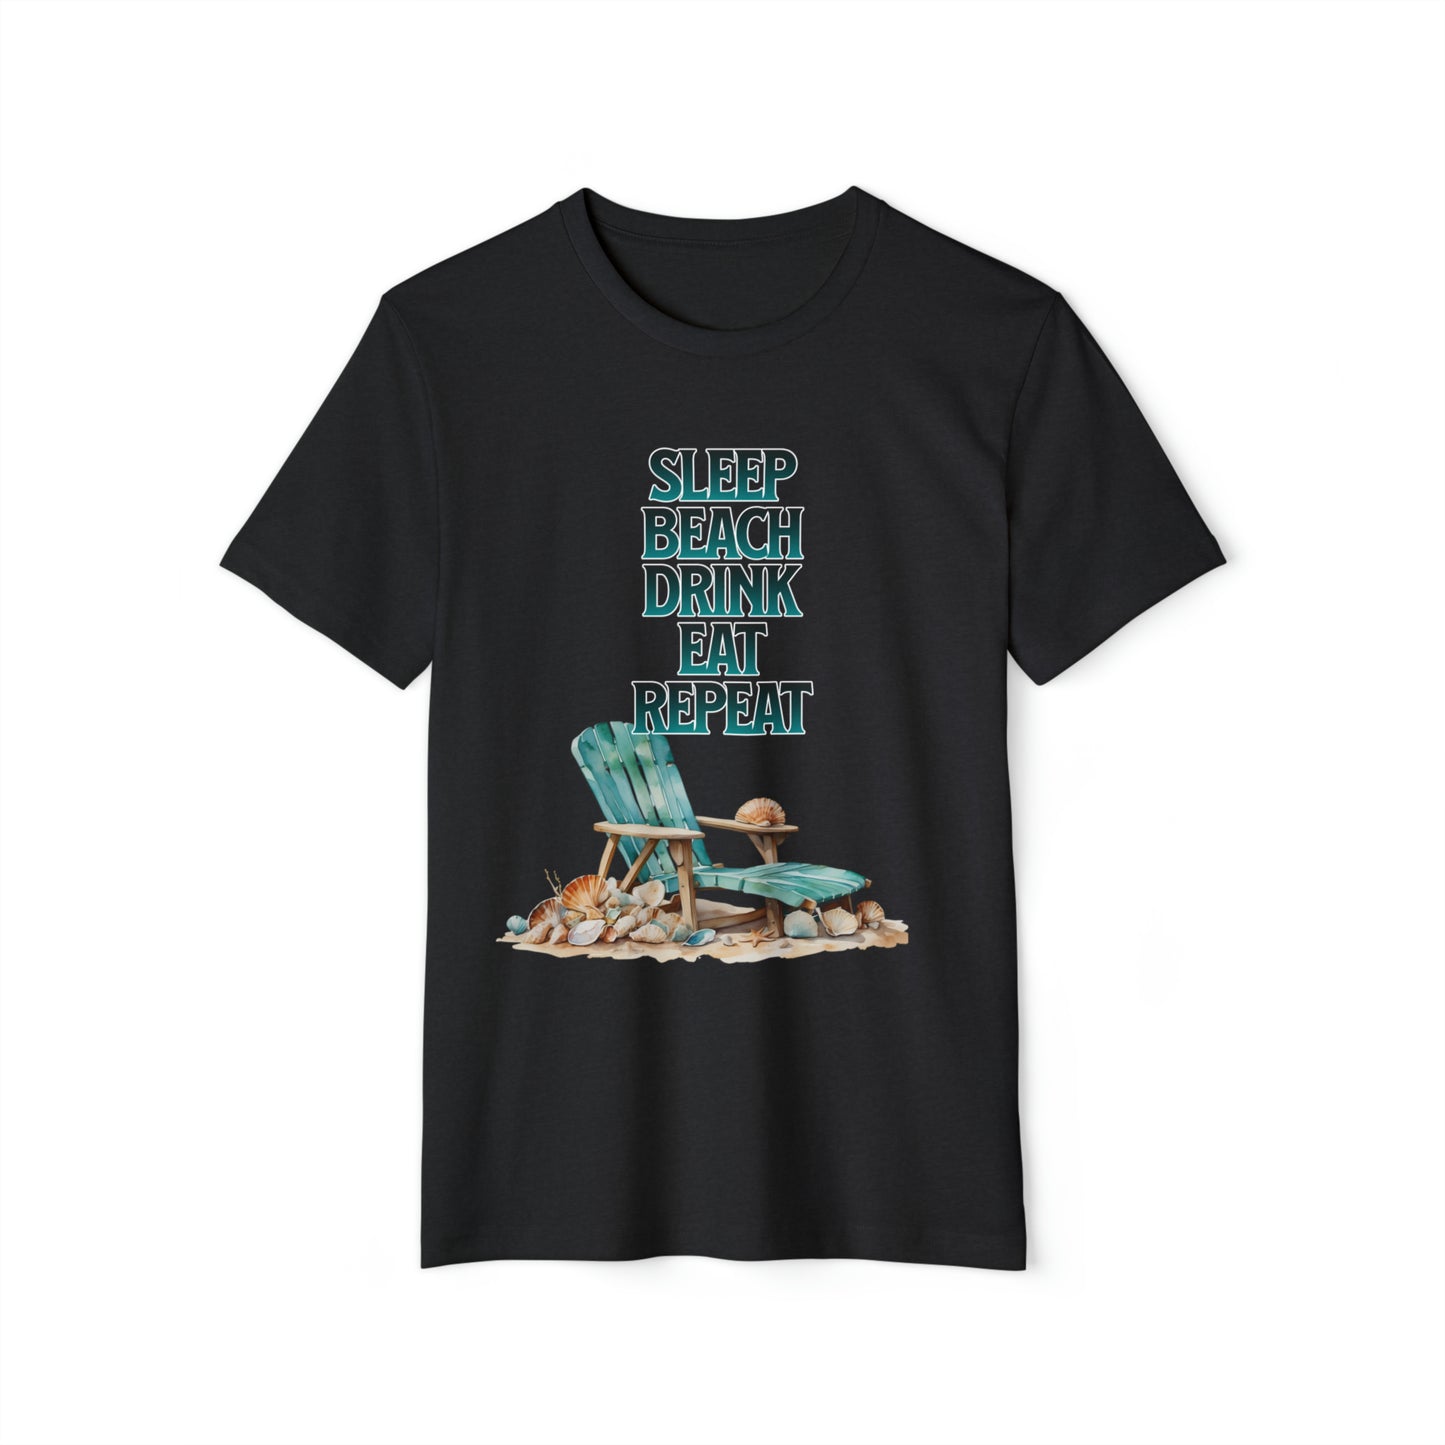 Beach Vacation TShirts, Sleep Beach Drink Eat Repeat Beach Lover Shirt, Recycled Organic Tee For Men And Women